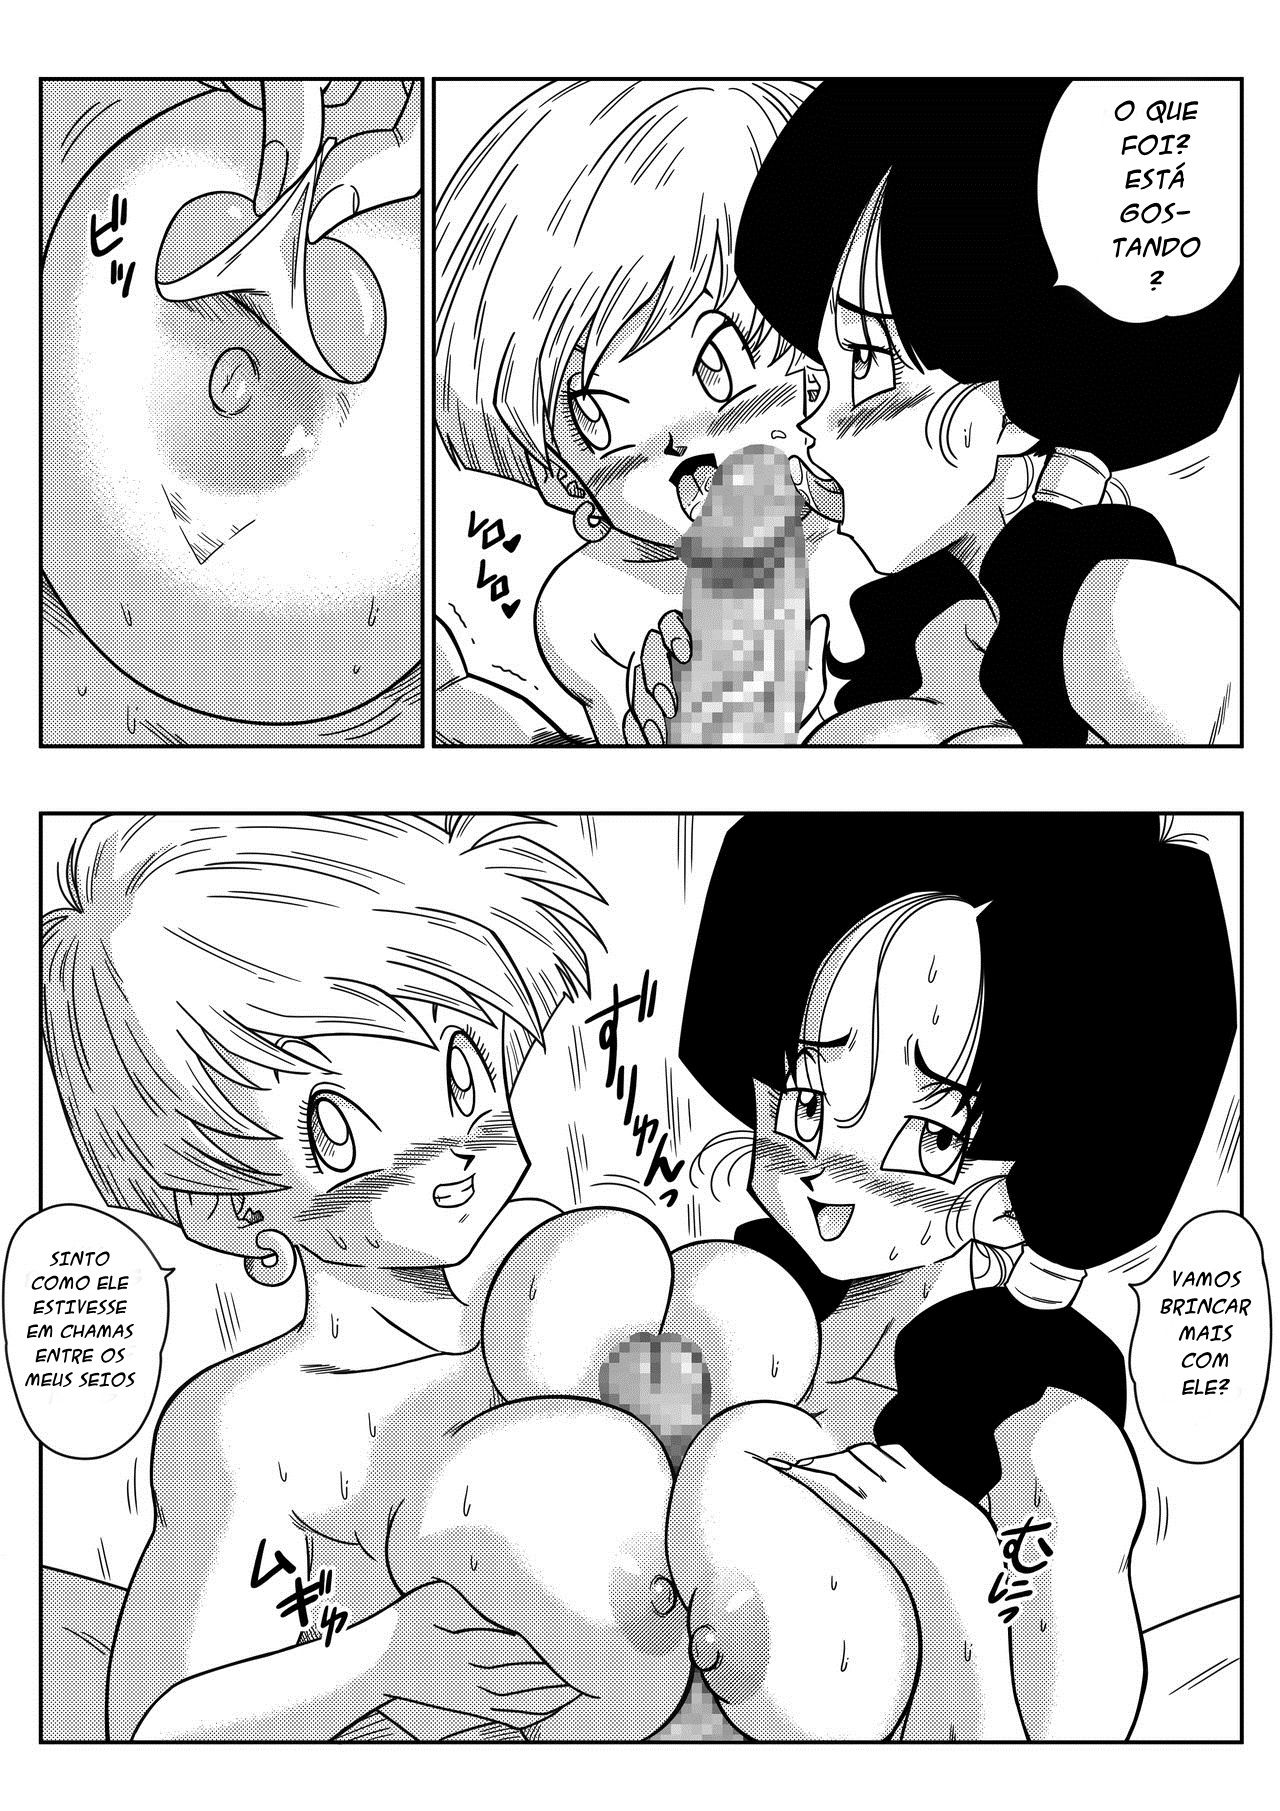 Dragon Ball Z 02: Vamos fazer sexo juntas? - Foto 10